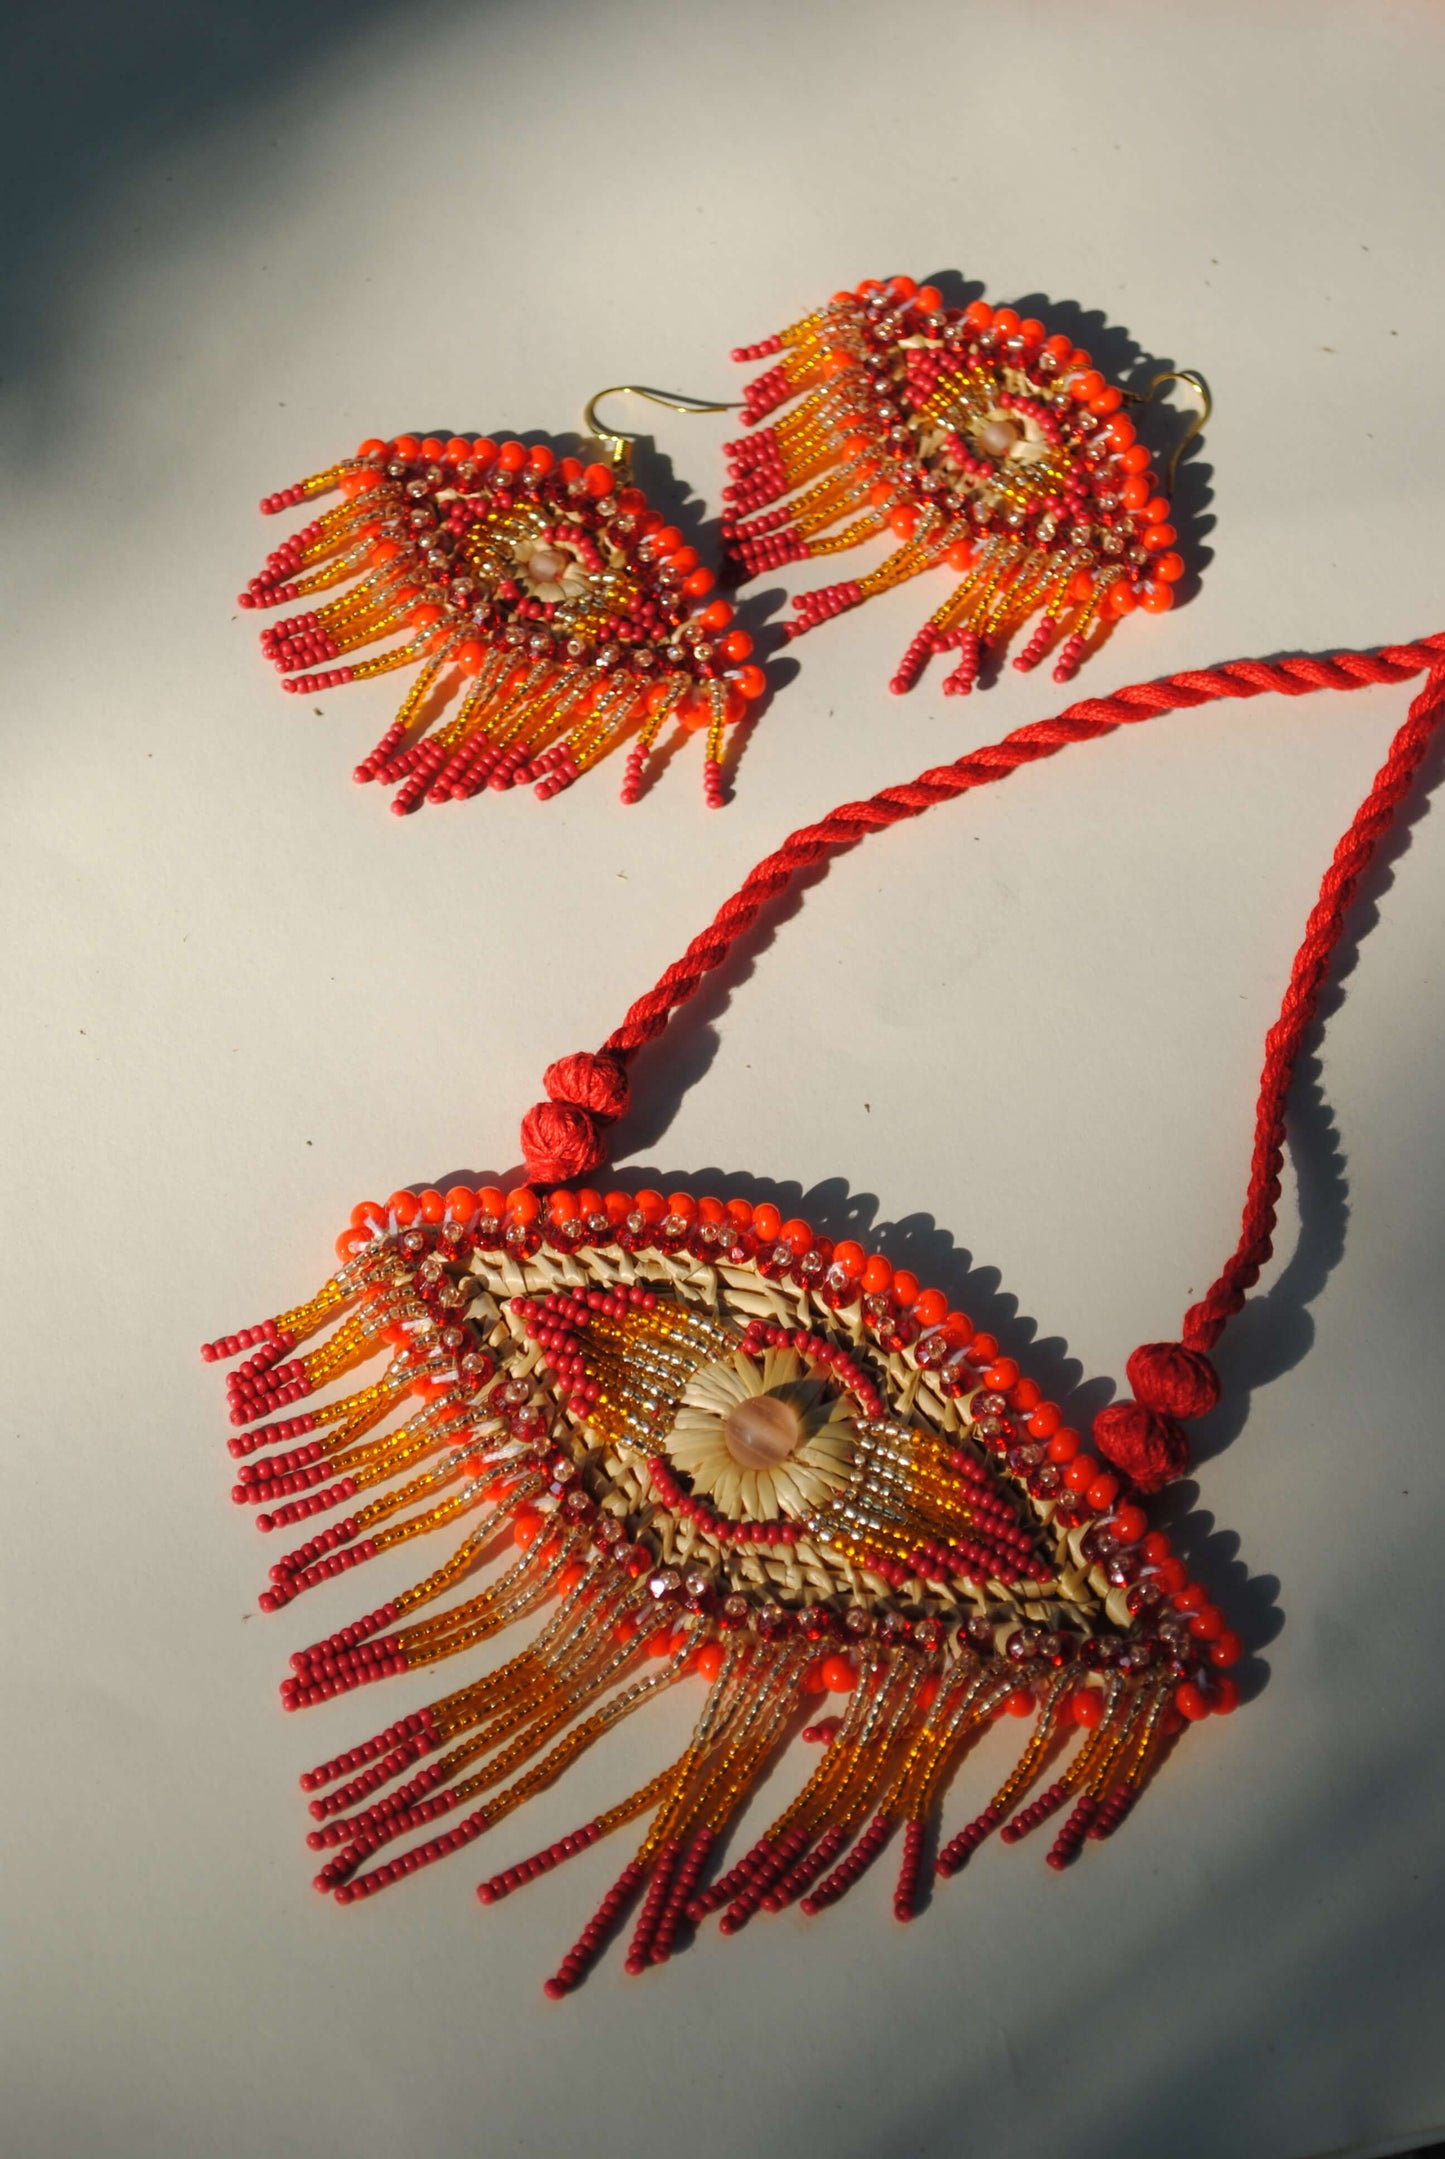 Truna natural fibre golden grass and zardosi handcrafted jewelry from Odisha, nazar red pendant